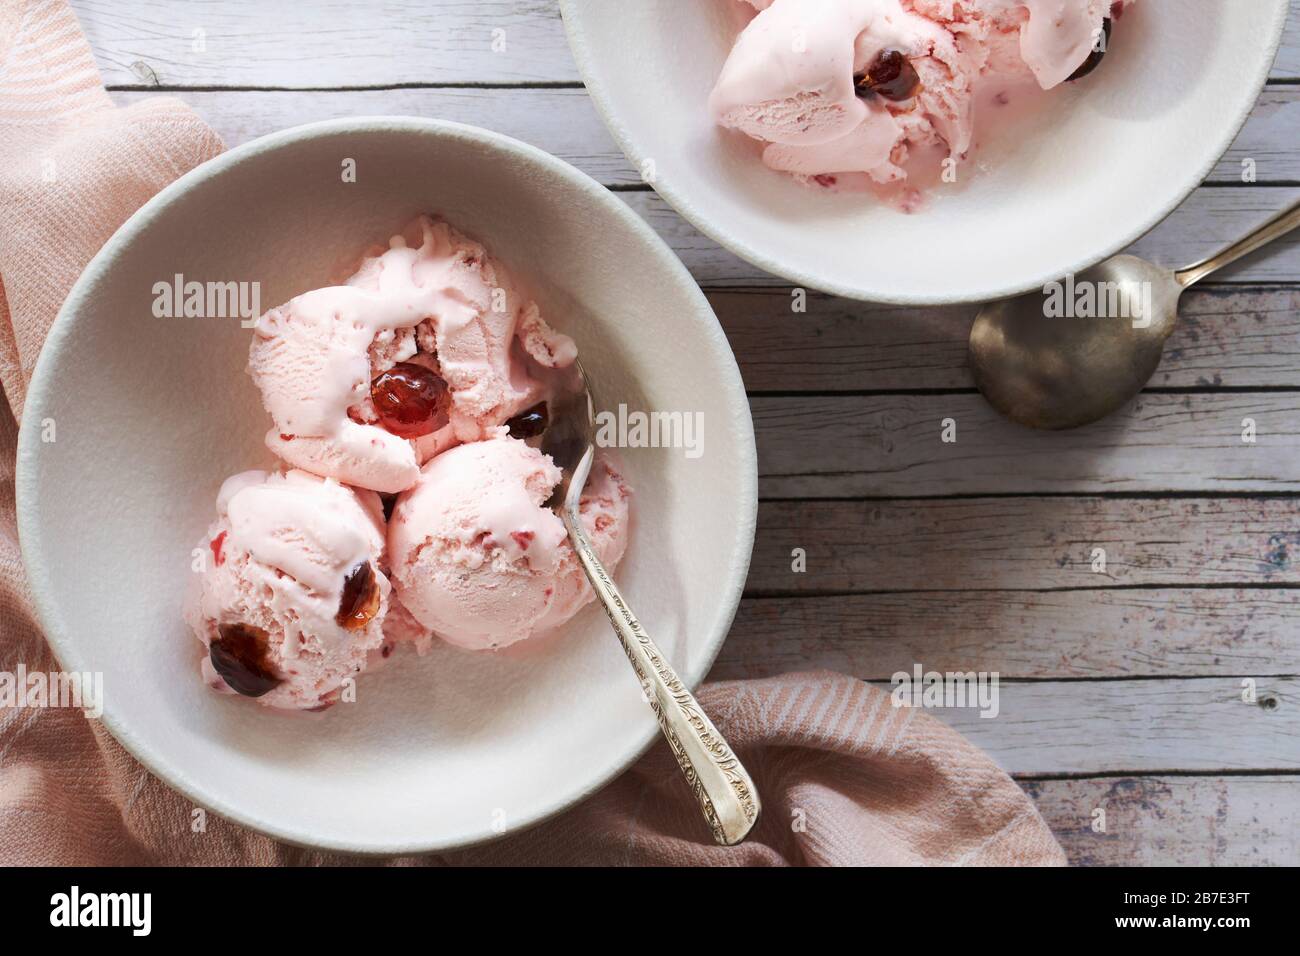 Scoops of cherry ice cream in dessert bowls. Stock Photo